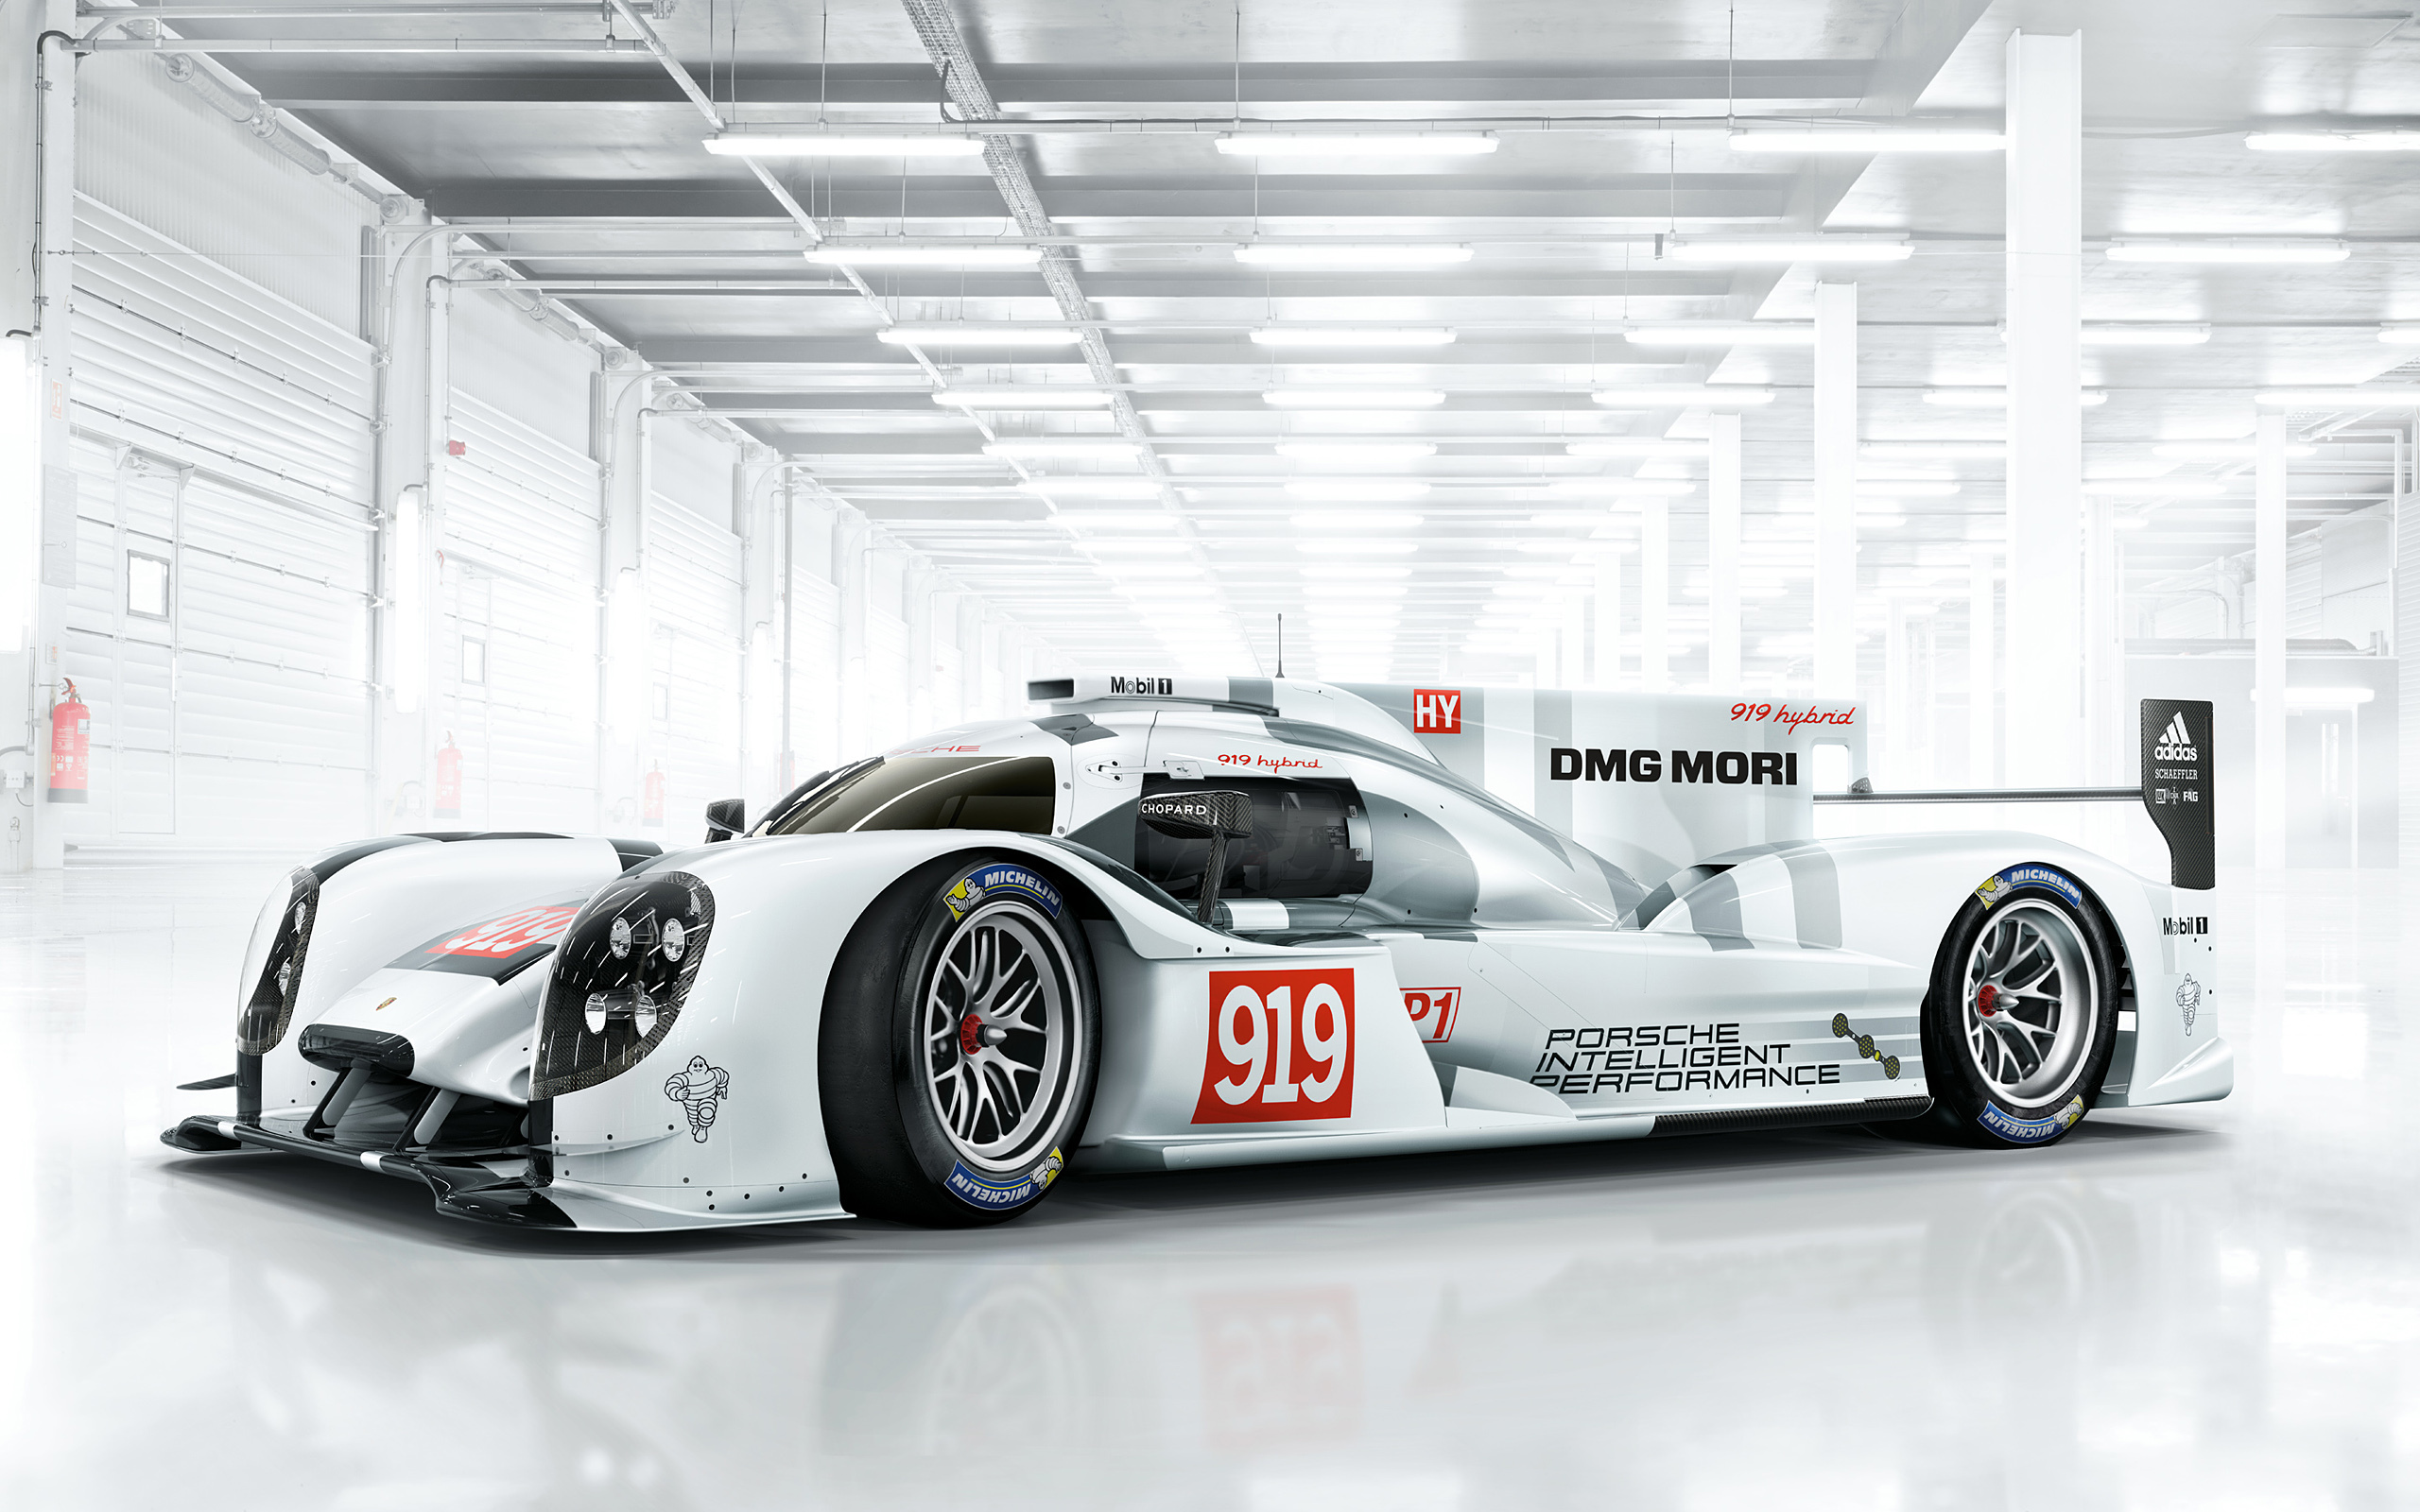 Porsche 919 dmg mori team download